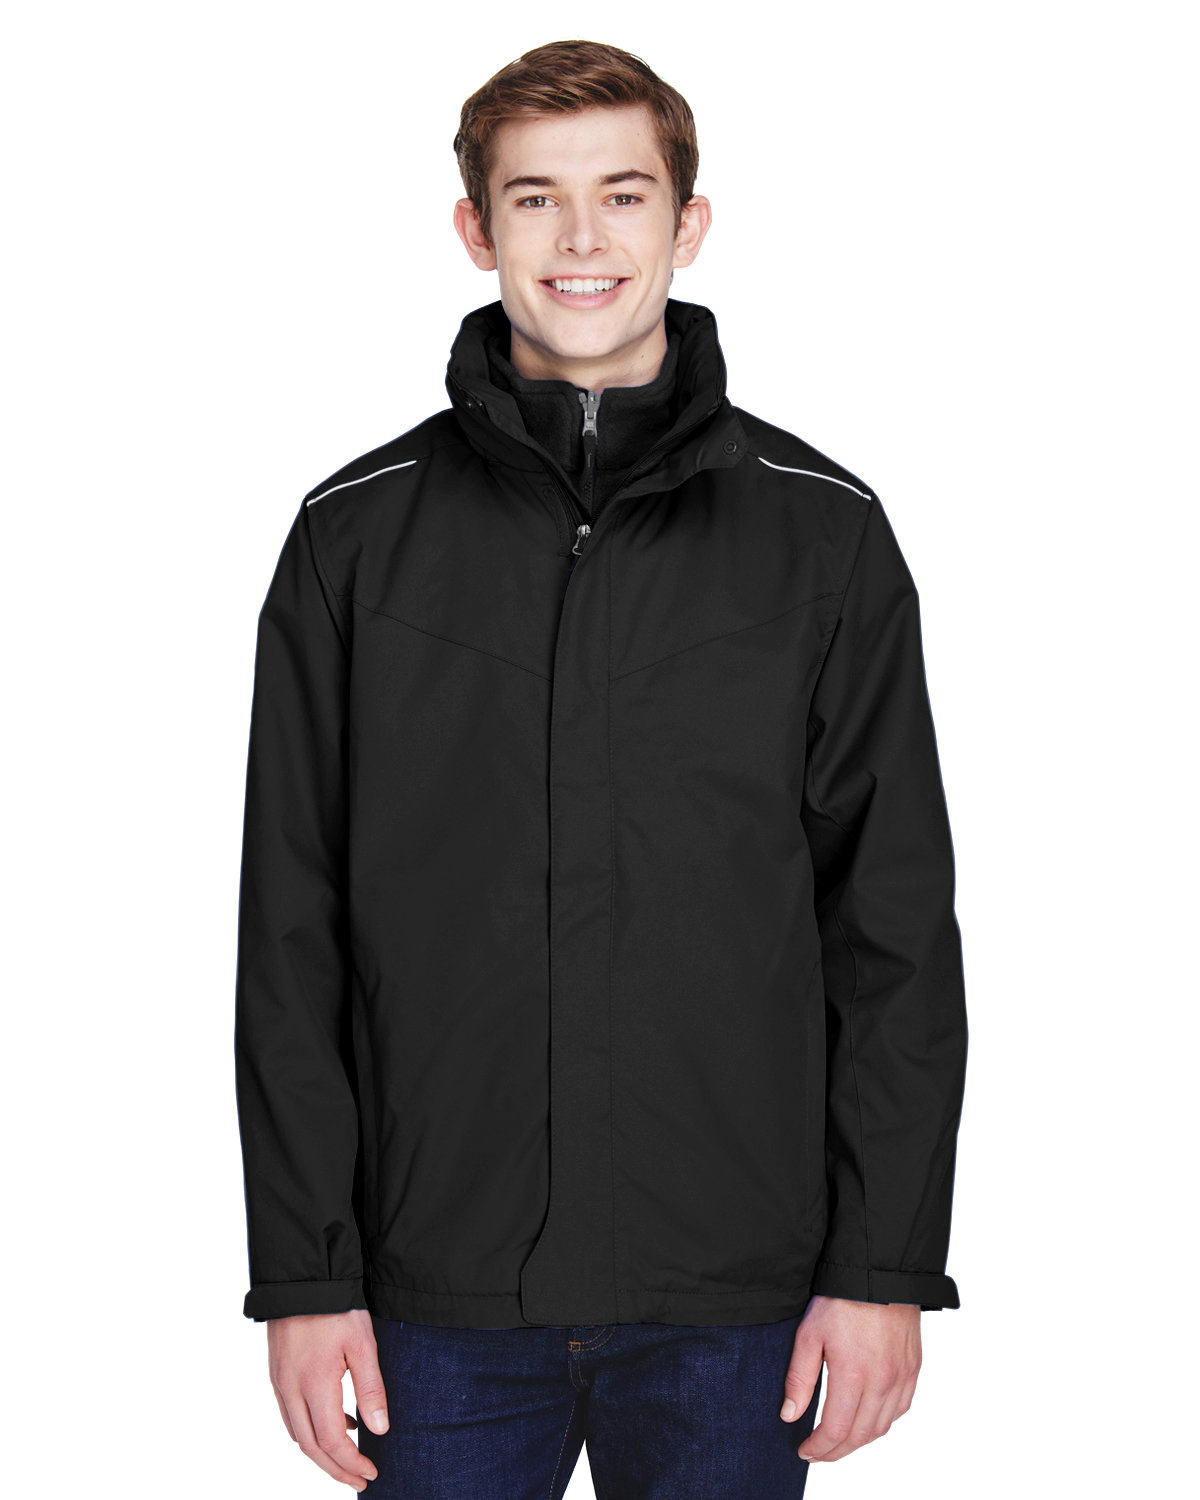 Core 365 Men's Tall Region 3-in-1 Jacket with Fleece Liner BLACK 